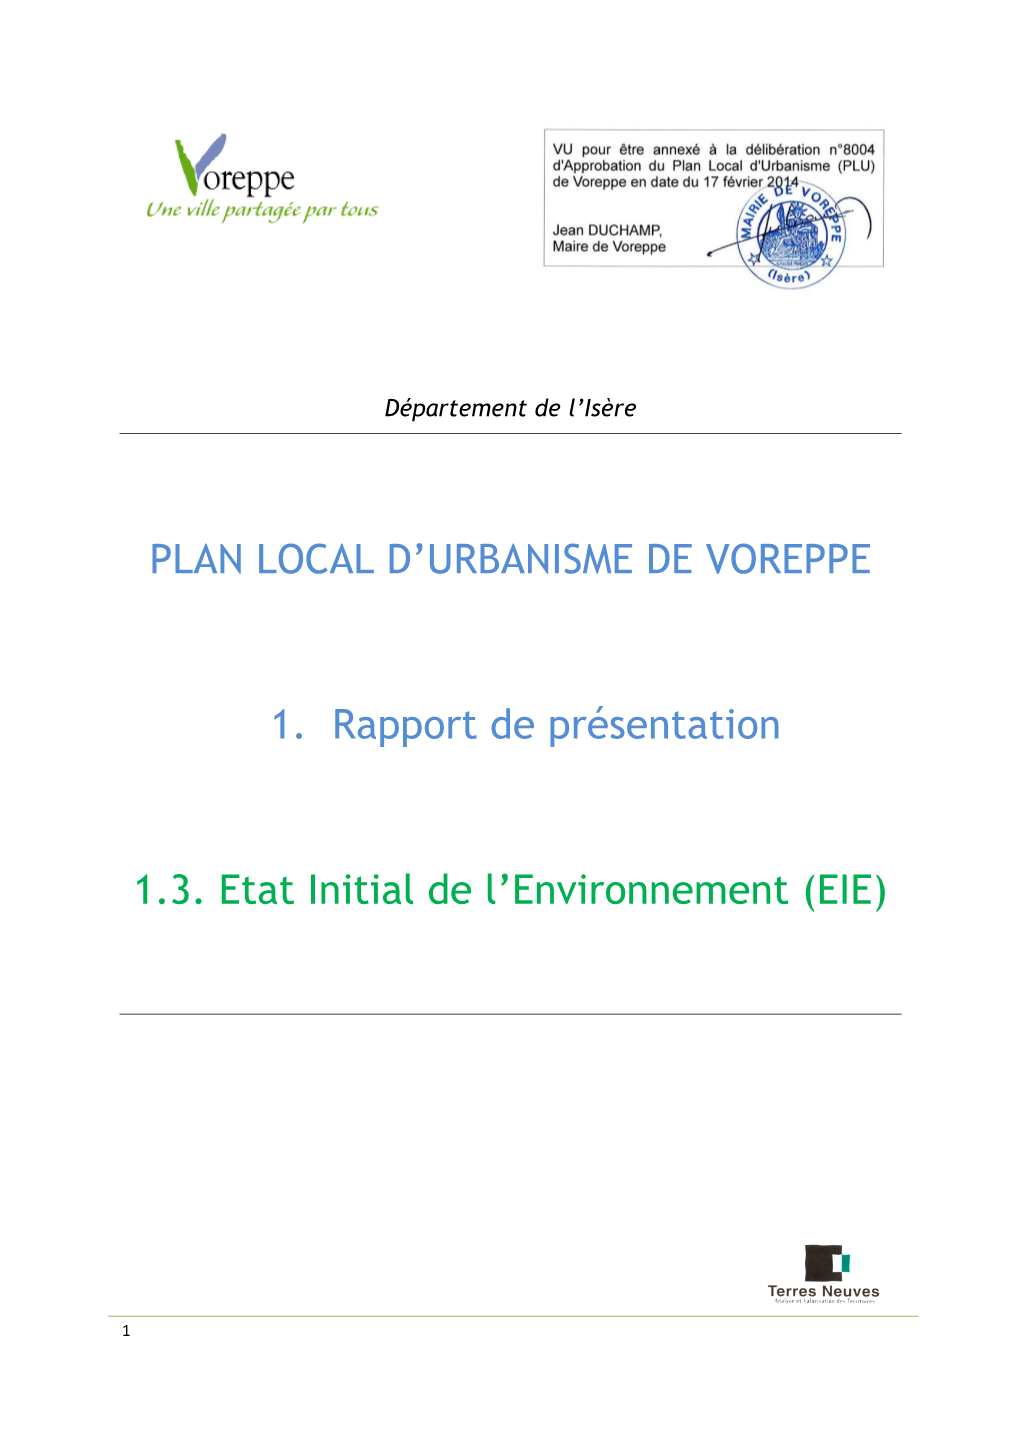 1.3. Etat Initial De L'environnement (EIE)